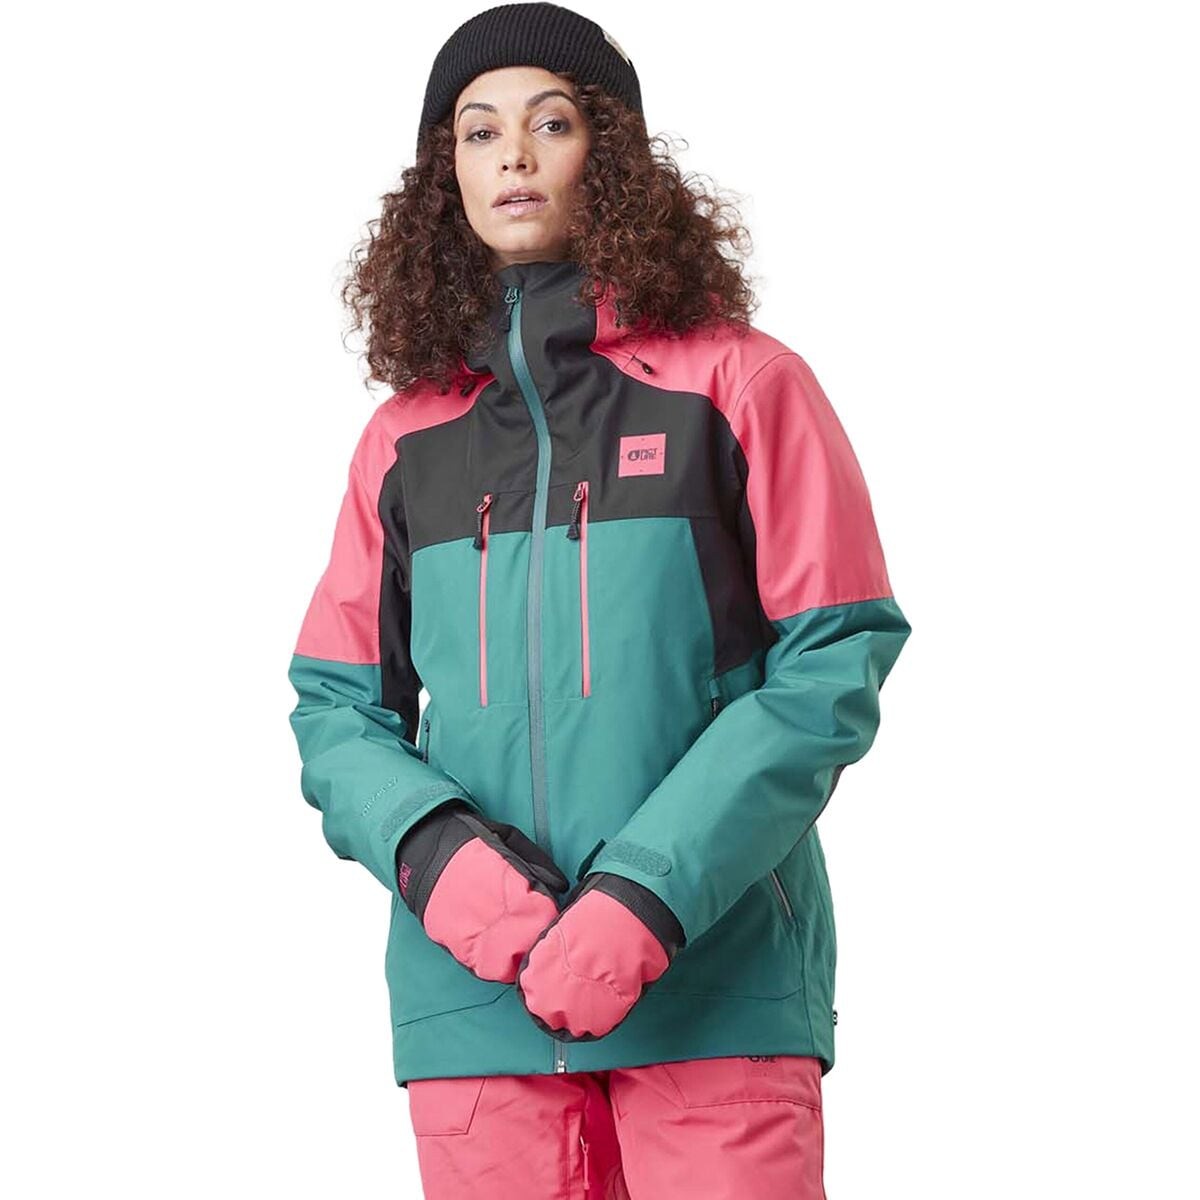 Picture Exa Women's Ski/Snowboard Jacket